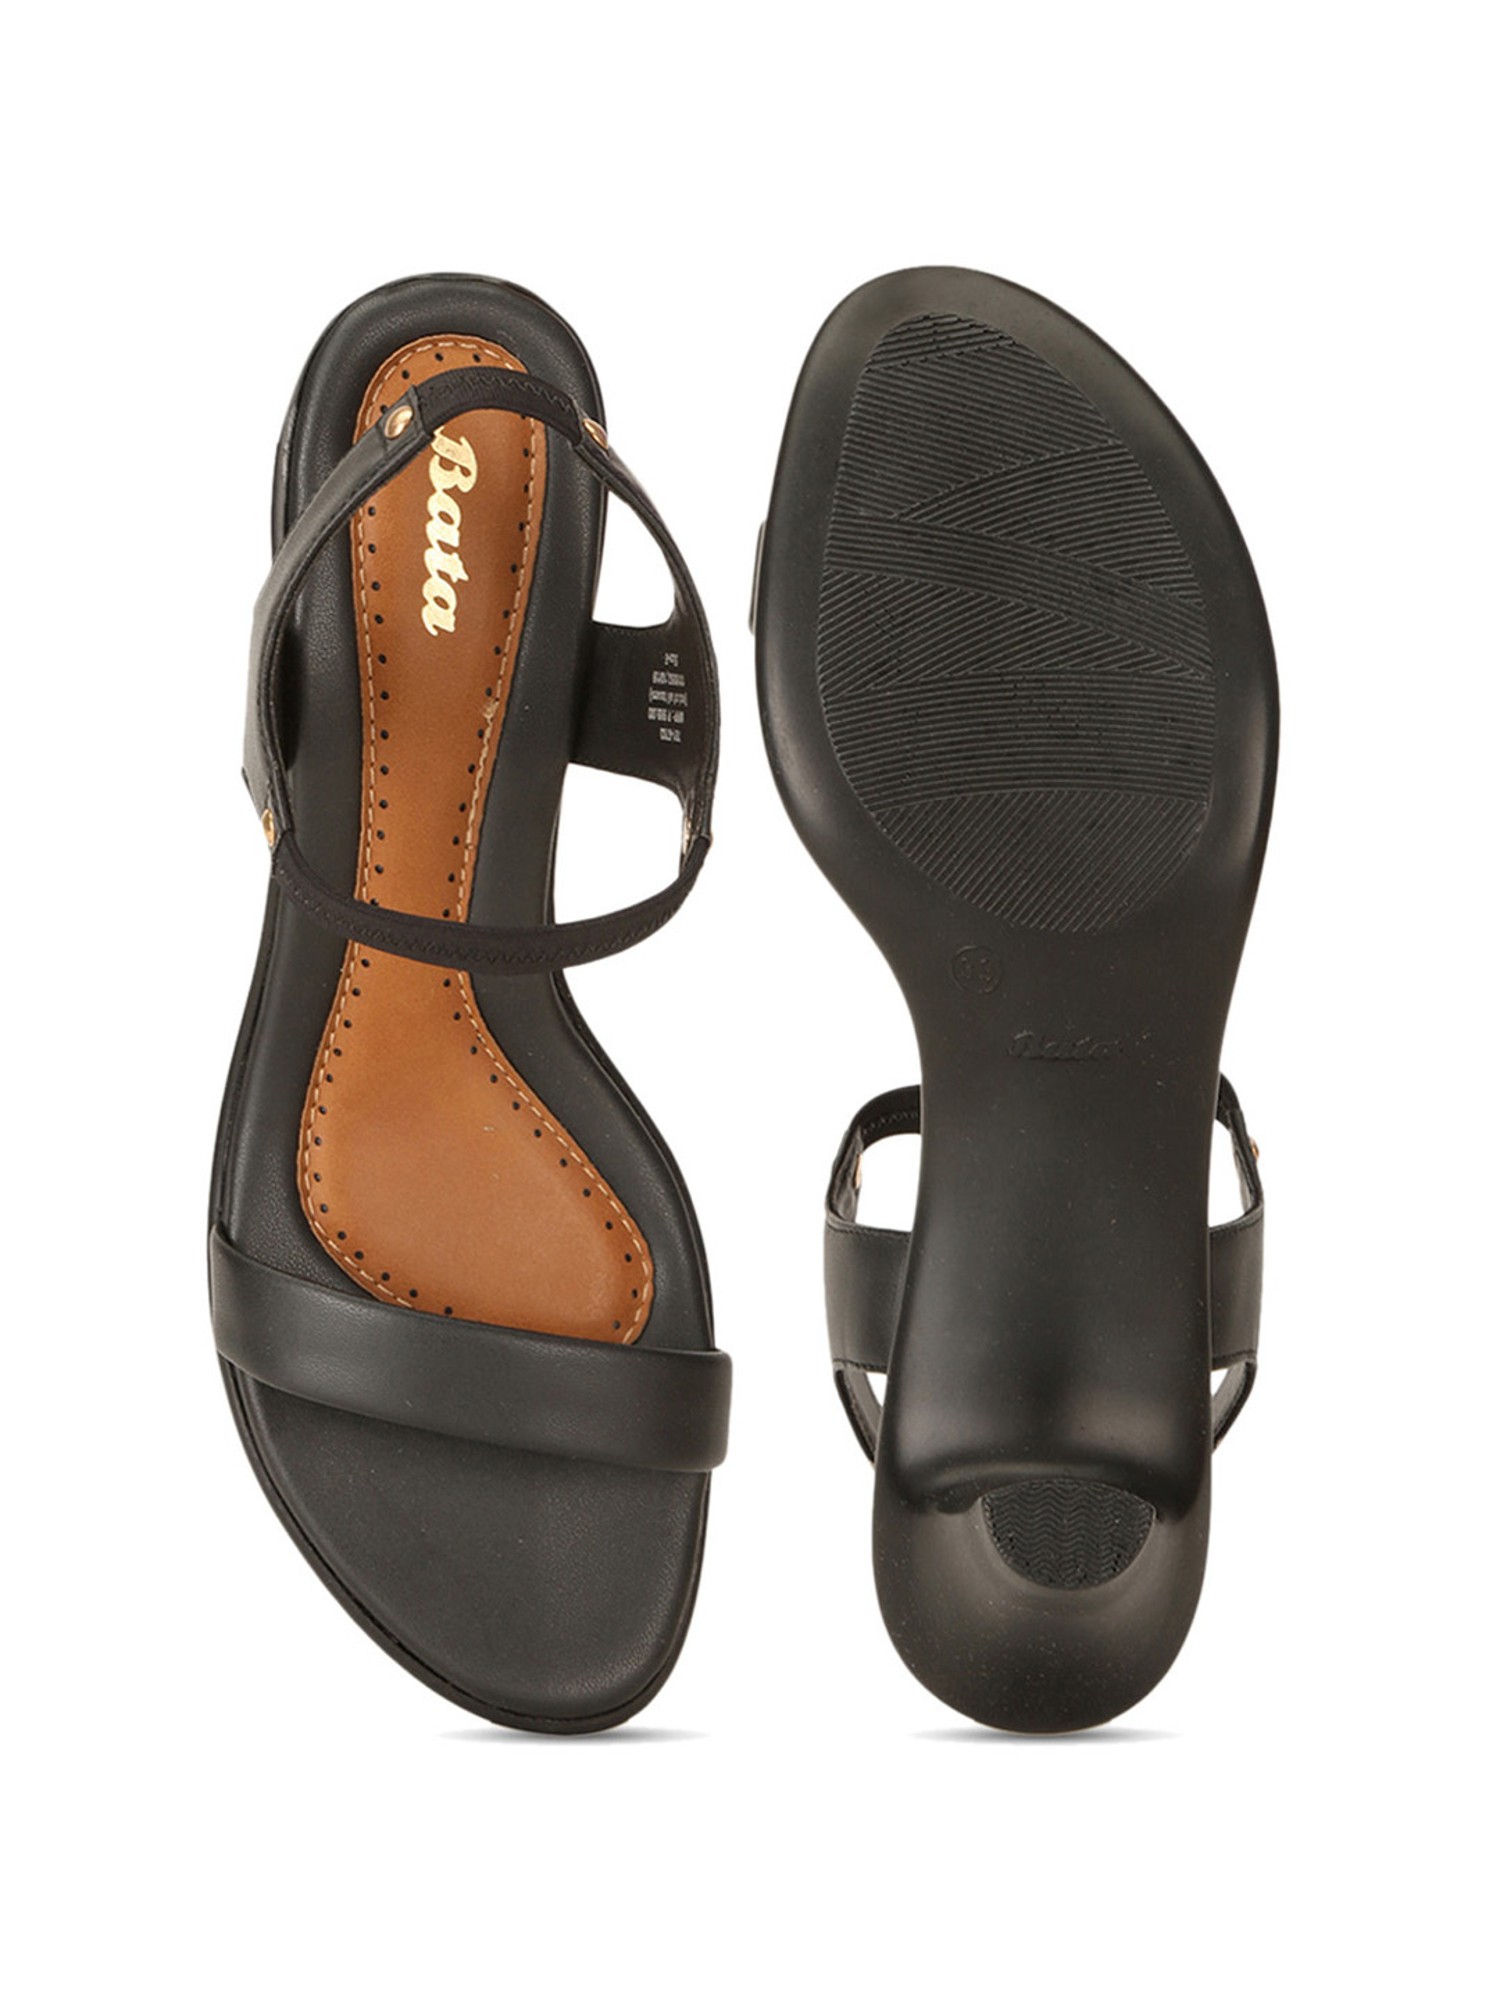 Buy BATA LITE Slippers For Women  Black  Online at Low Prices in India   Paytmmallcom